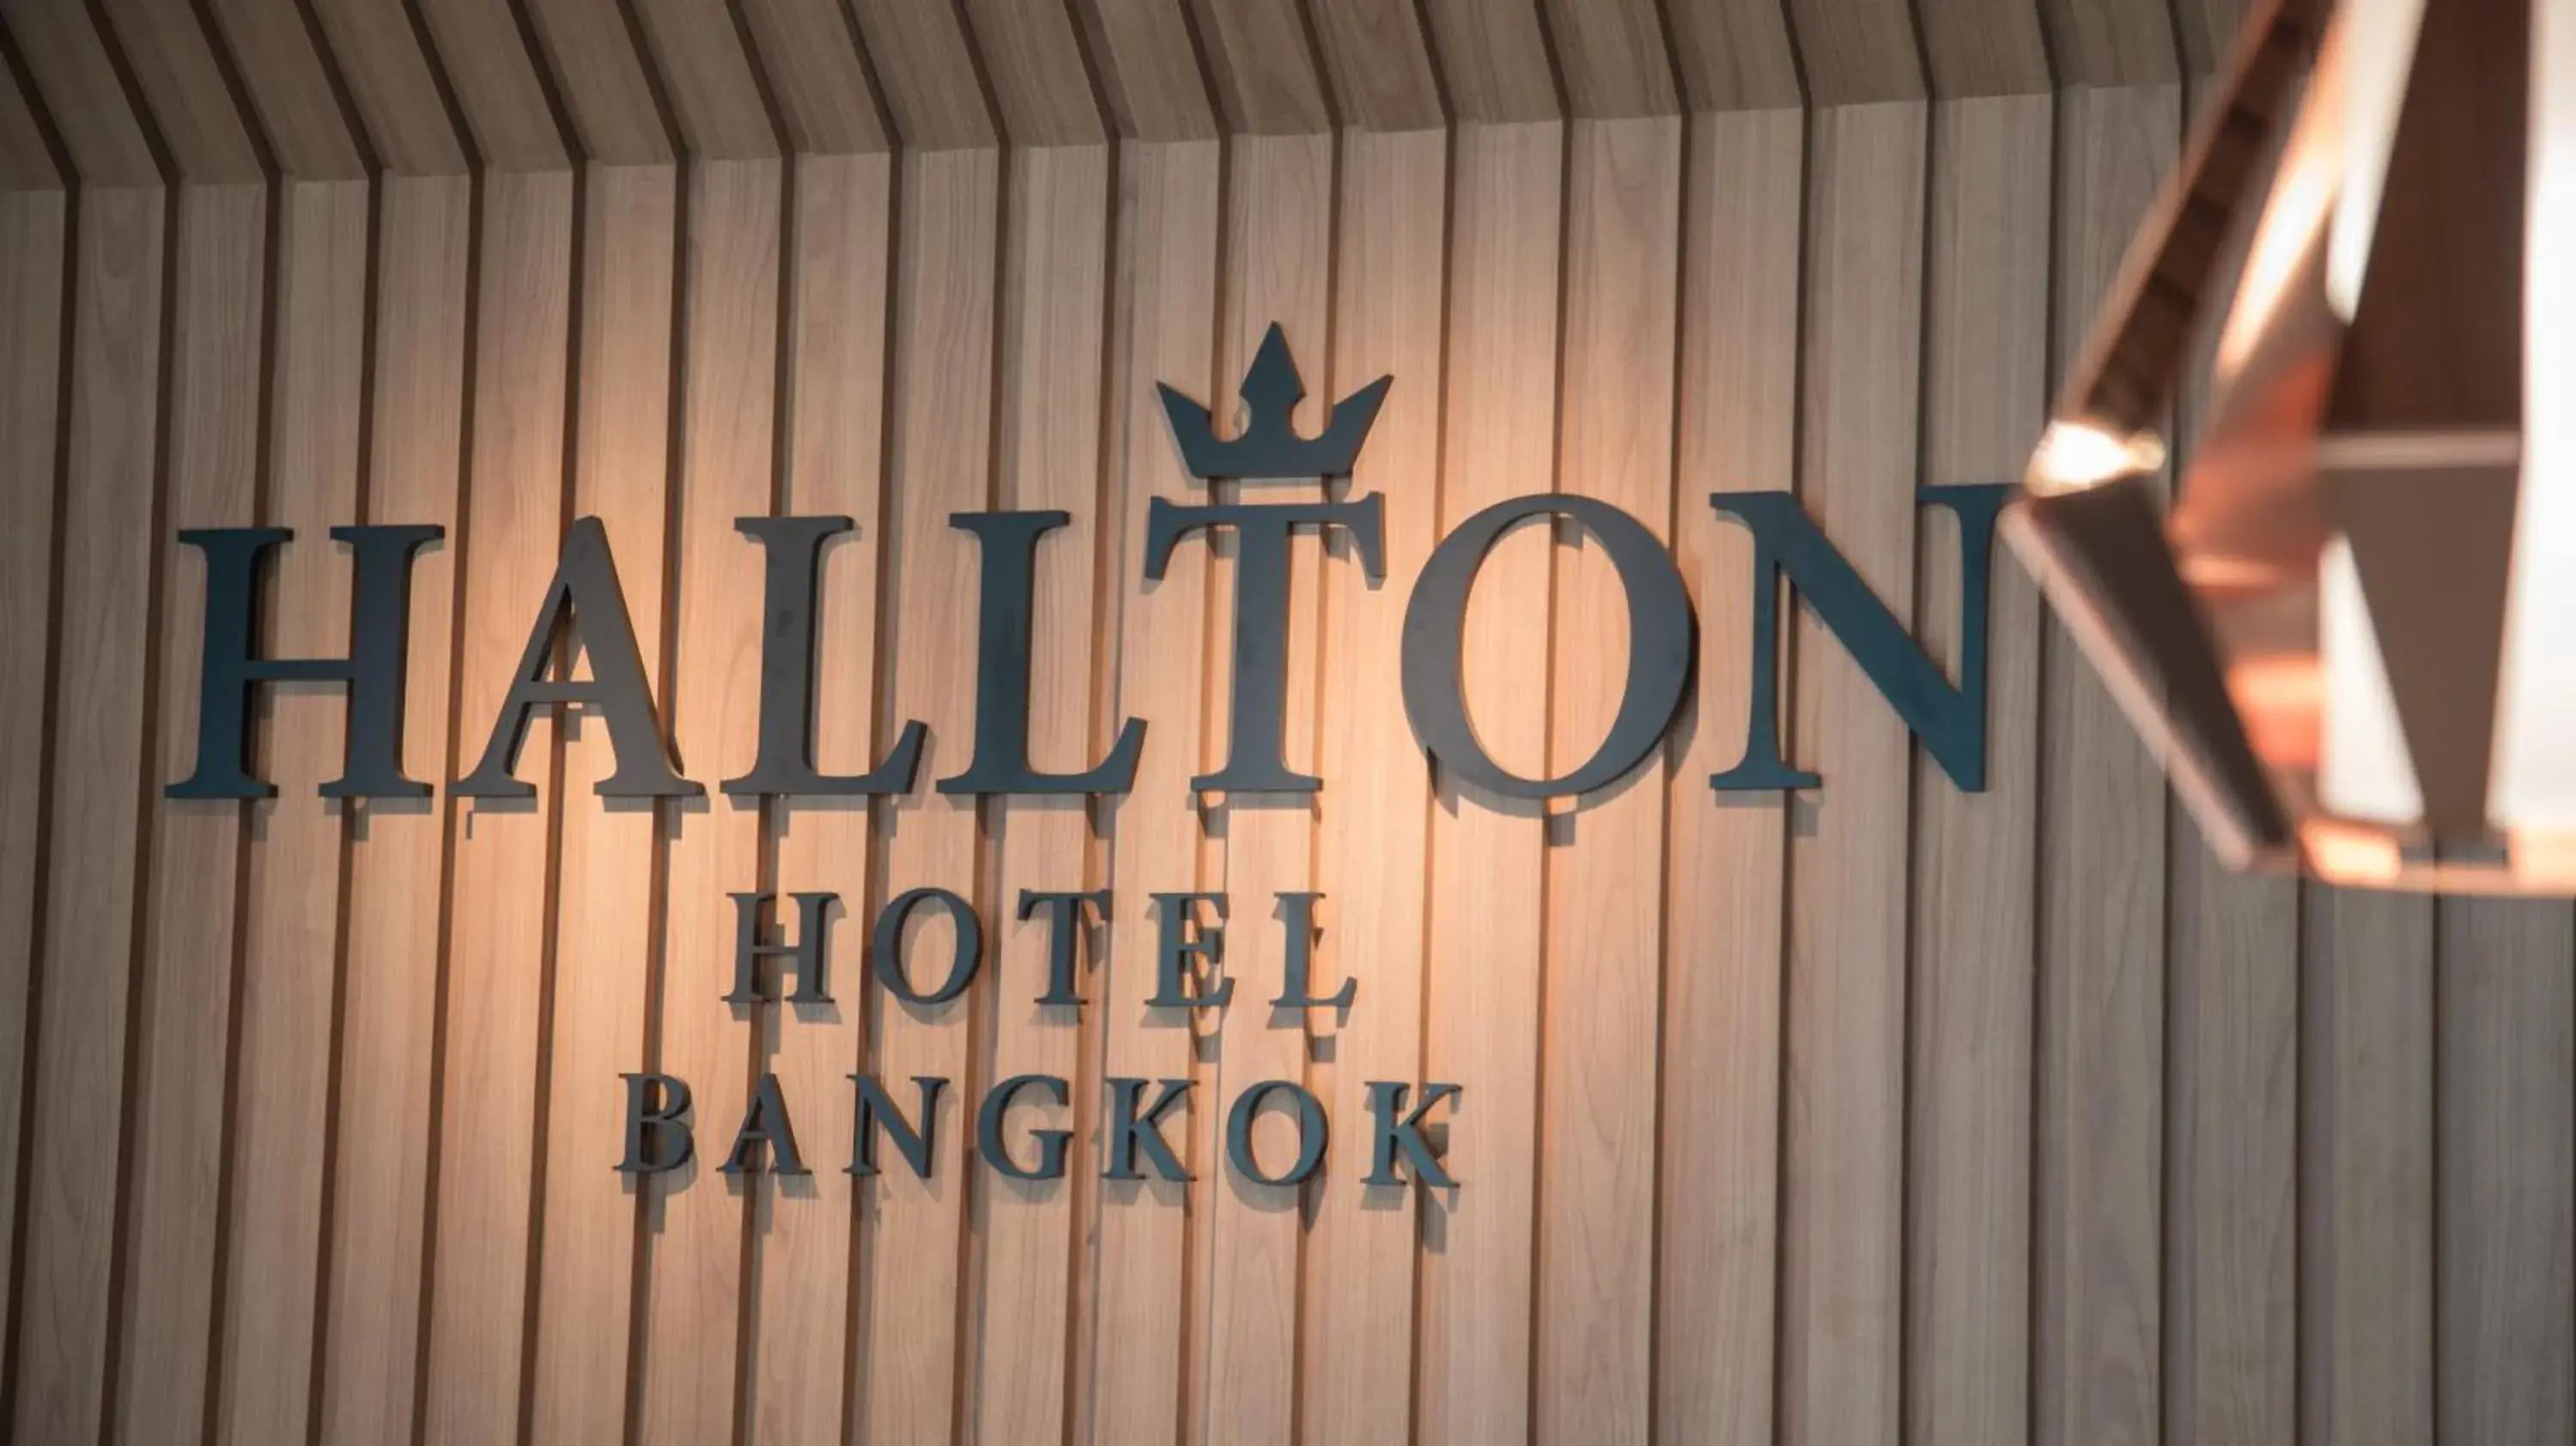 Hallton Hotel Bangkok